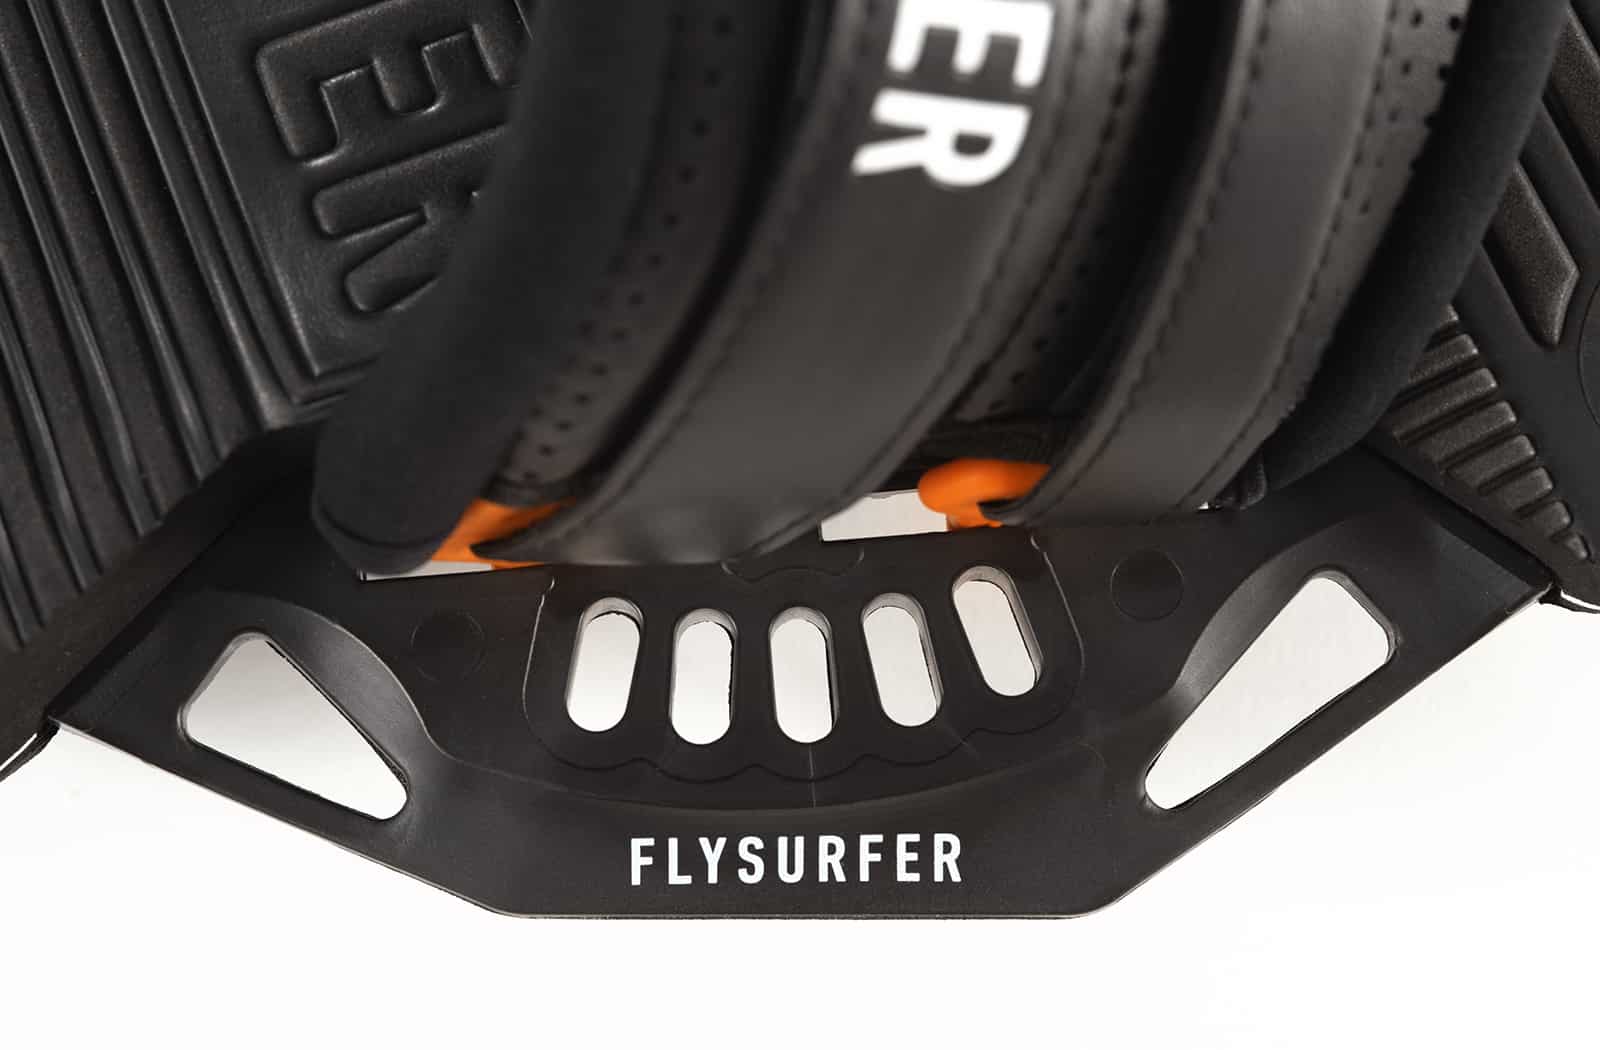 NEW 2020 Flysurfer Squad Footpads and Straps 